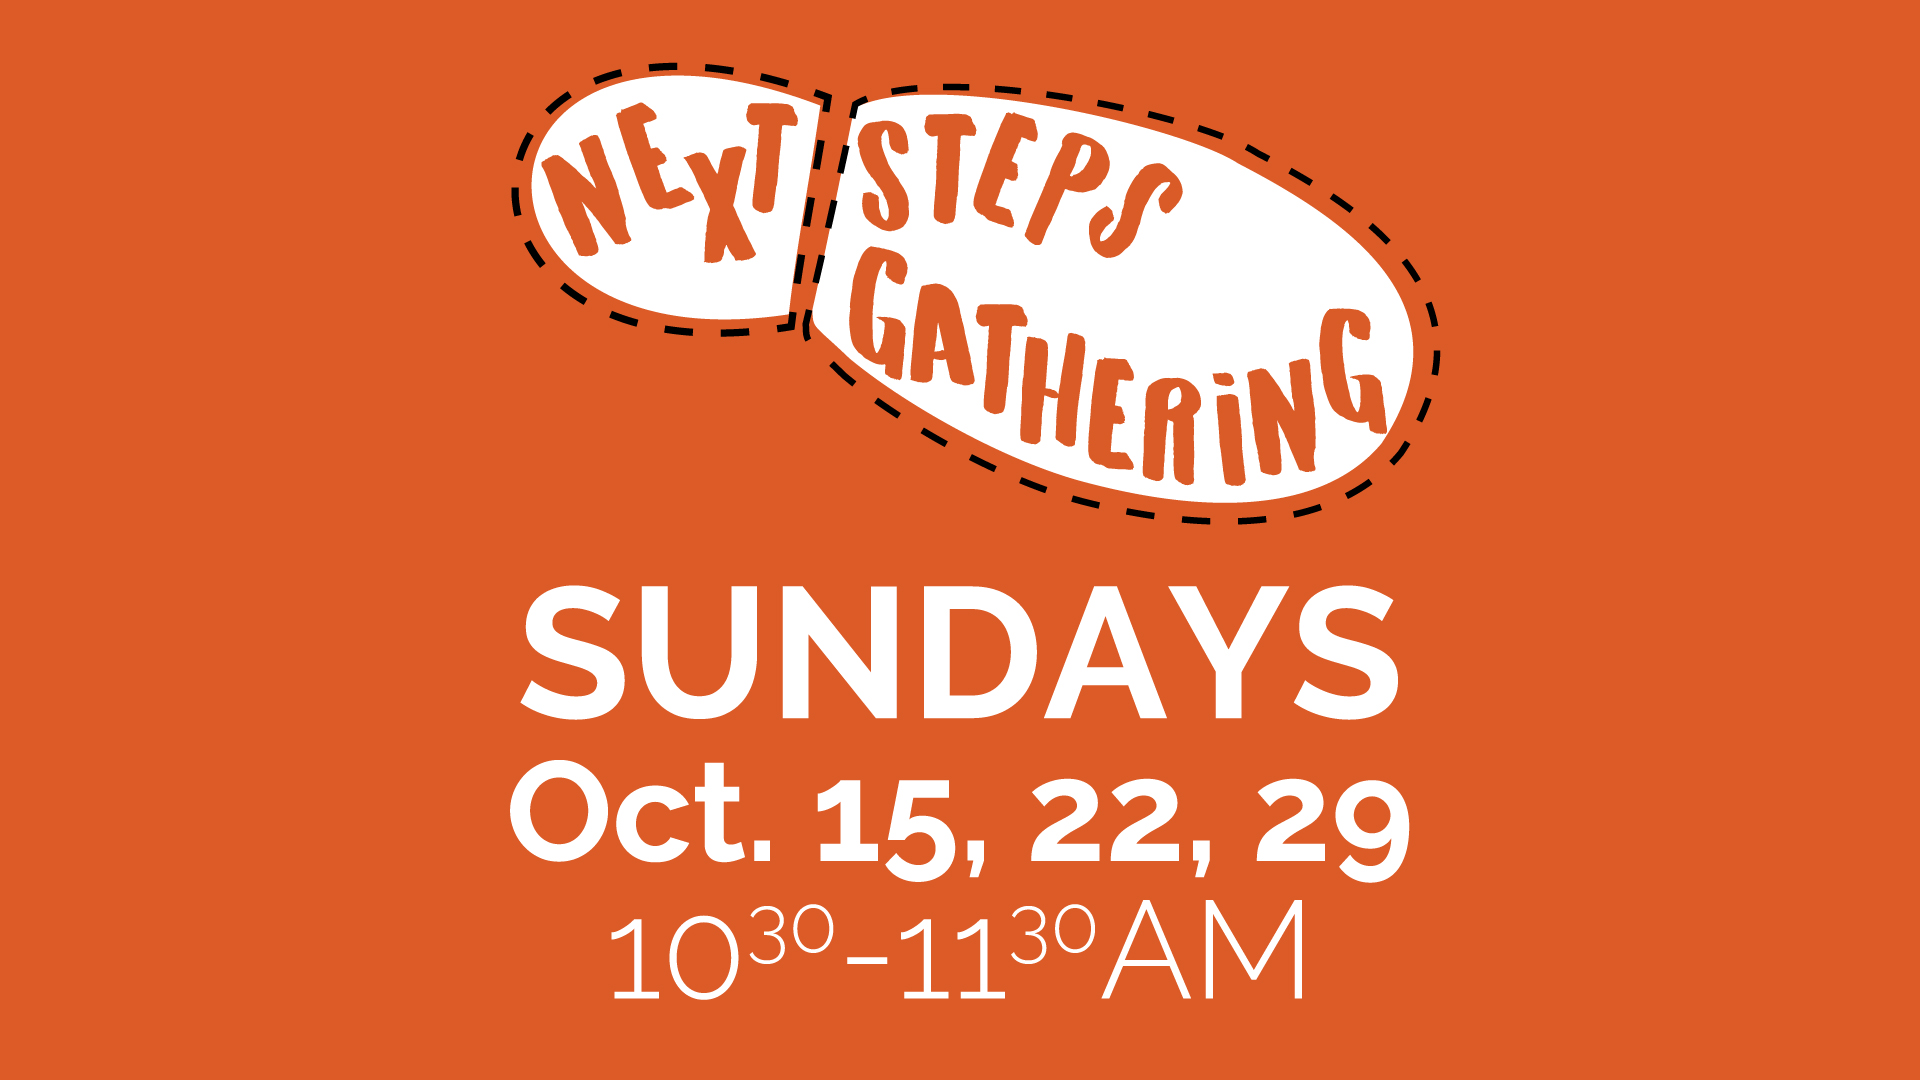 Next Steps Gathering | Sundays October 15, 22, 29 from 10:30-11:30AM